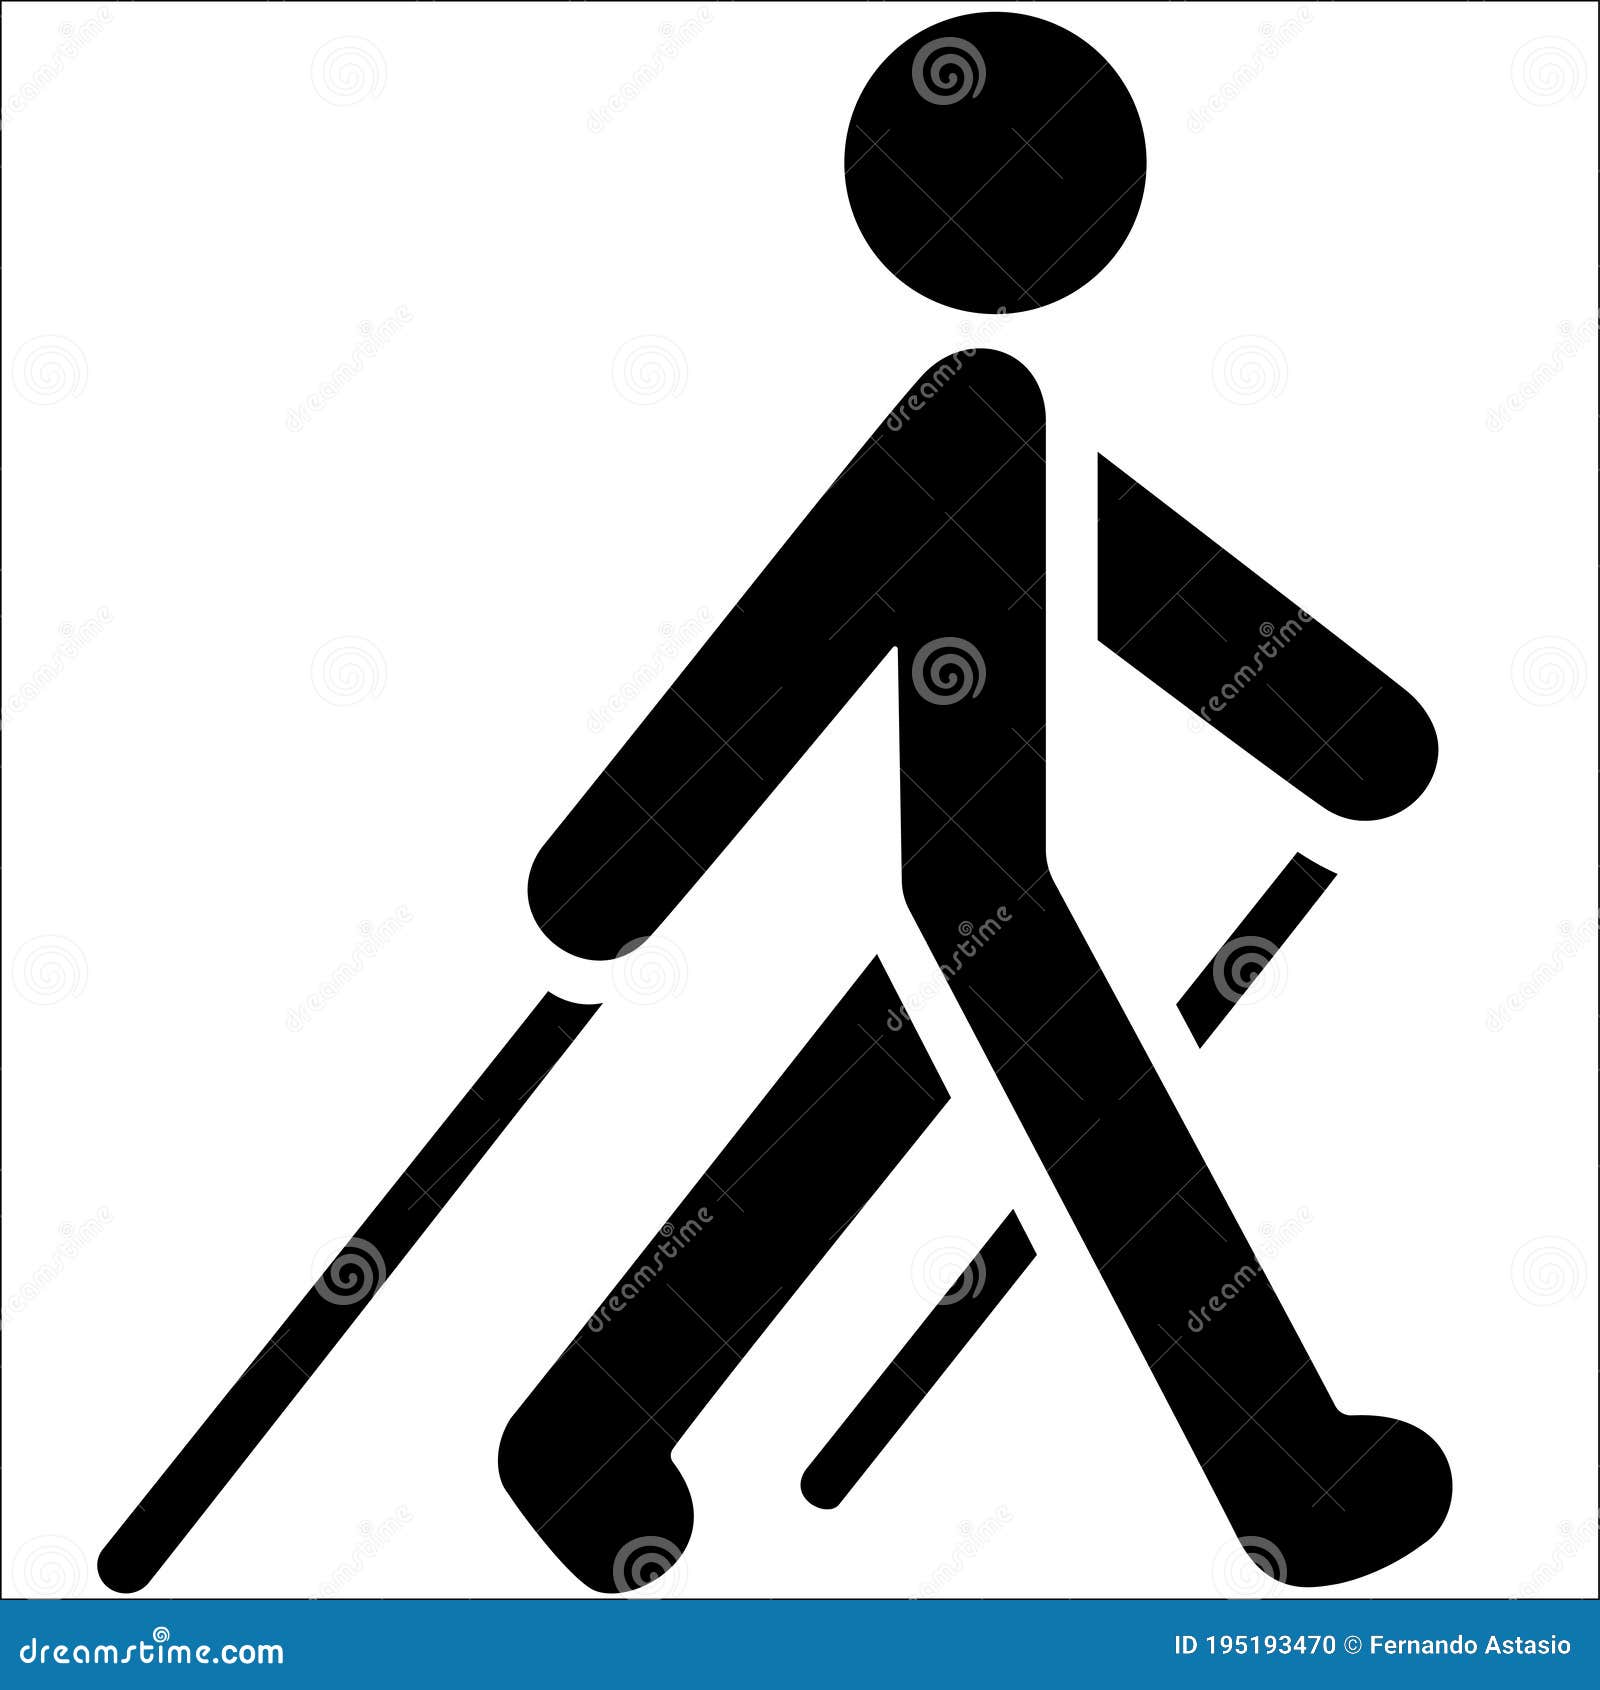 nordic walking black icon on white background